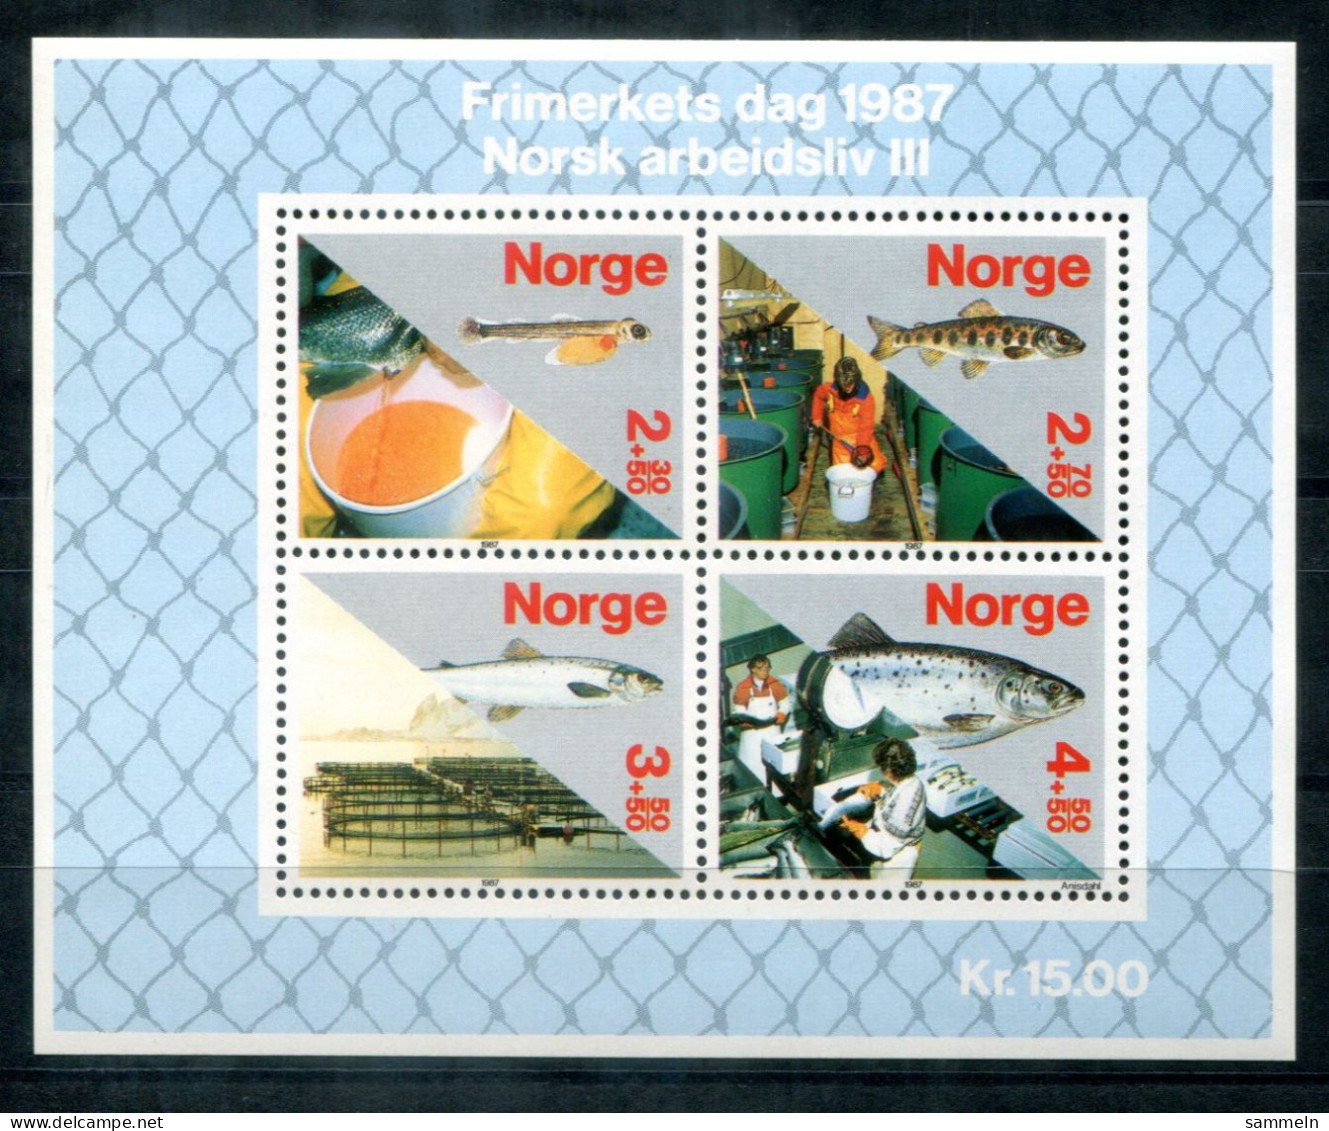 NORWEGEN Block 8, Bl.8 Mnh - Sisch, Fish, Poisson - NORWAY / NORVÈGE - Blocs-feuillets